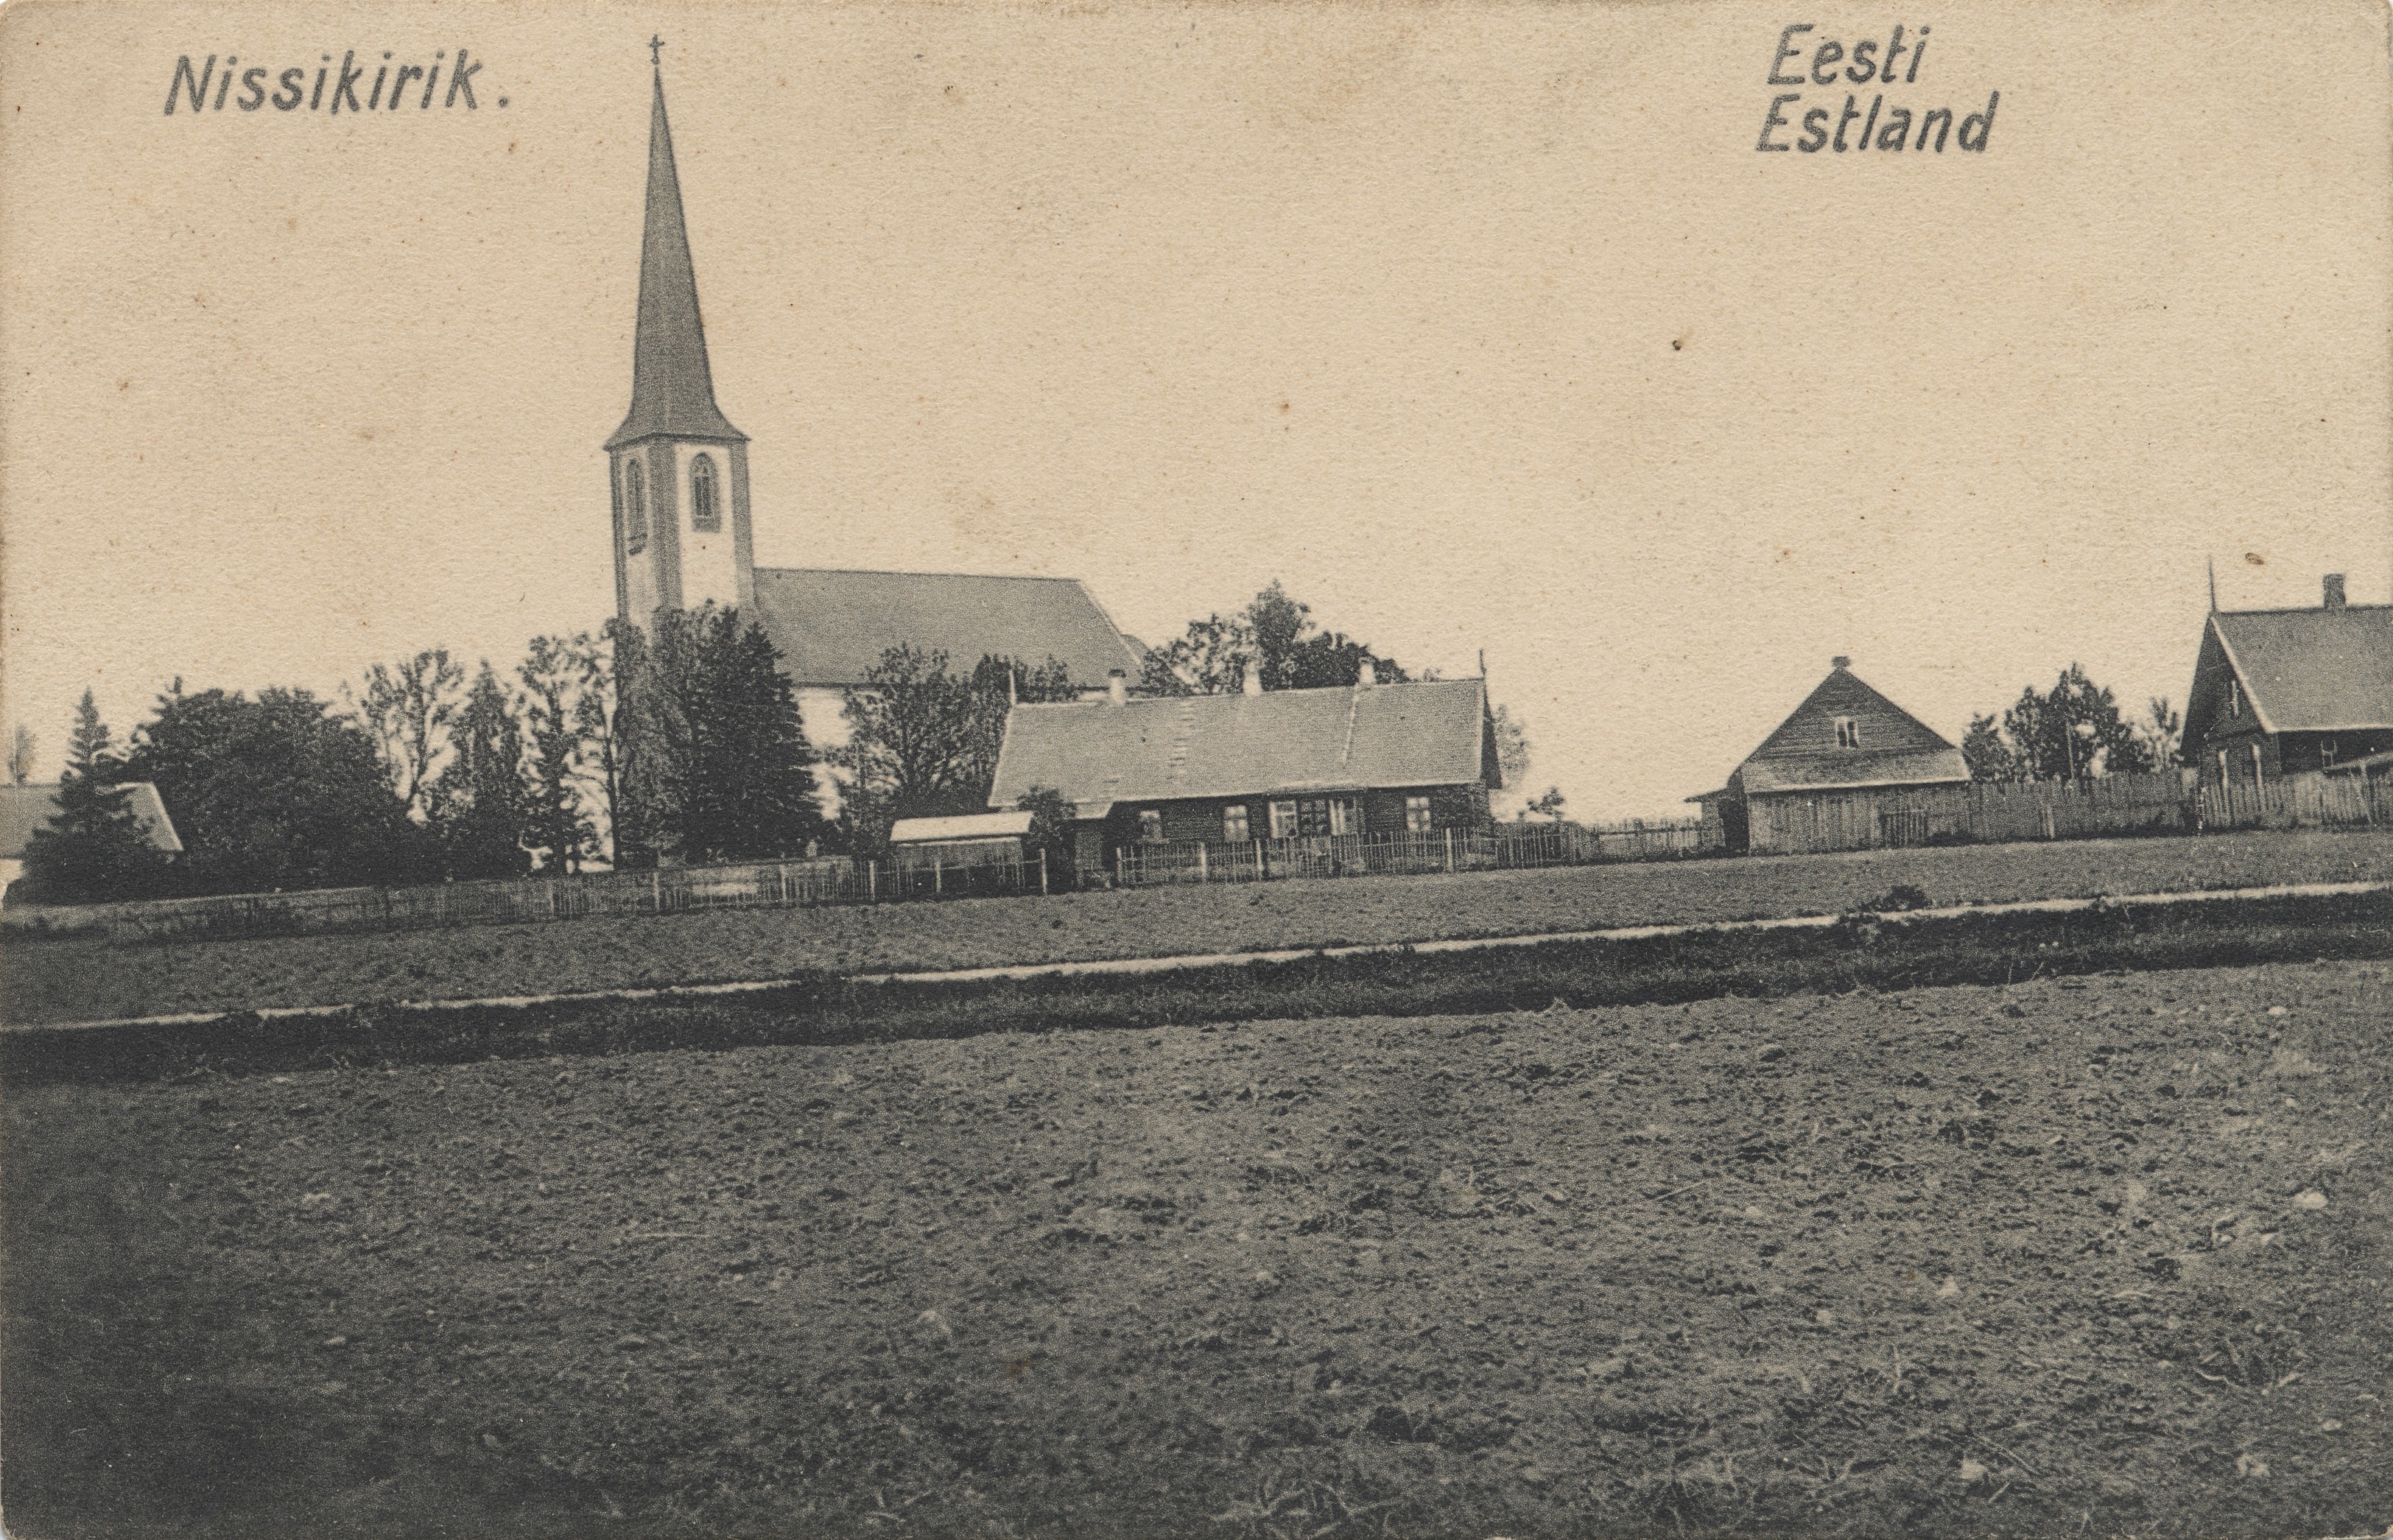 Estonia : Nissi Church = Estonia